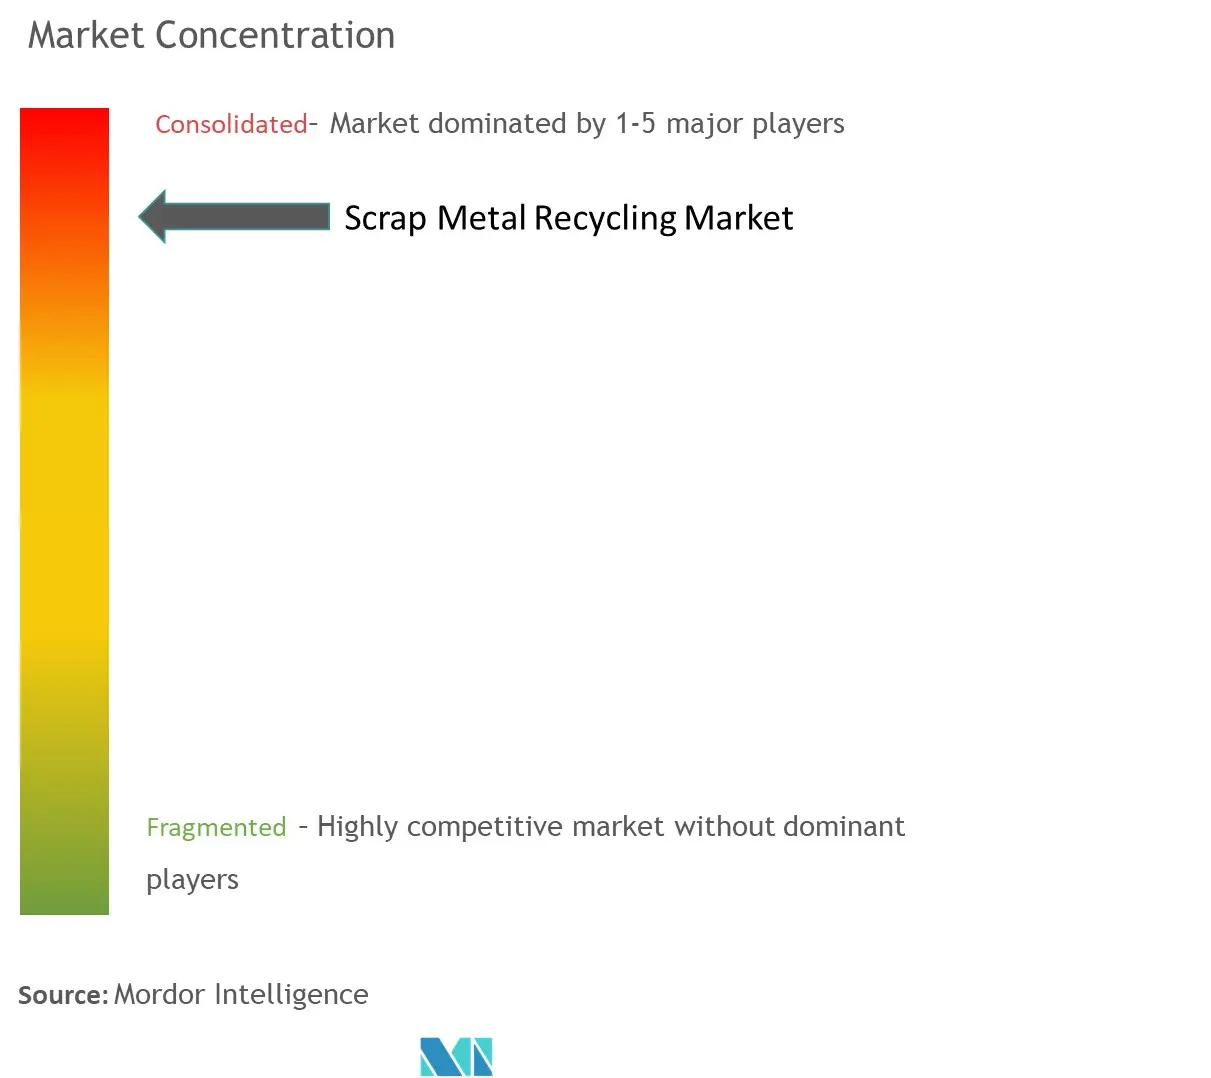 Scrap Metal Recycling Market Concentration